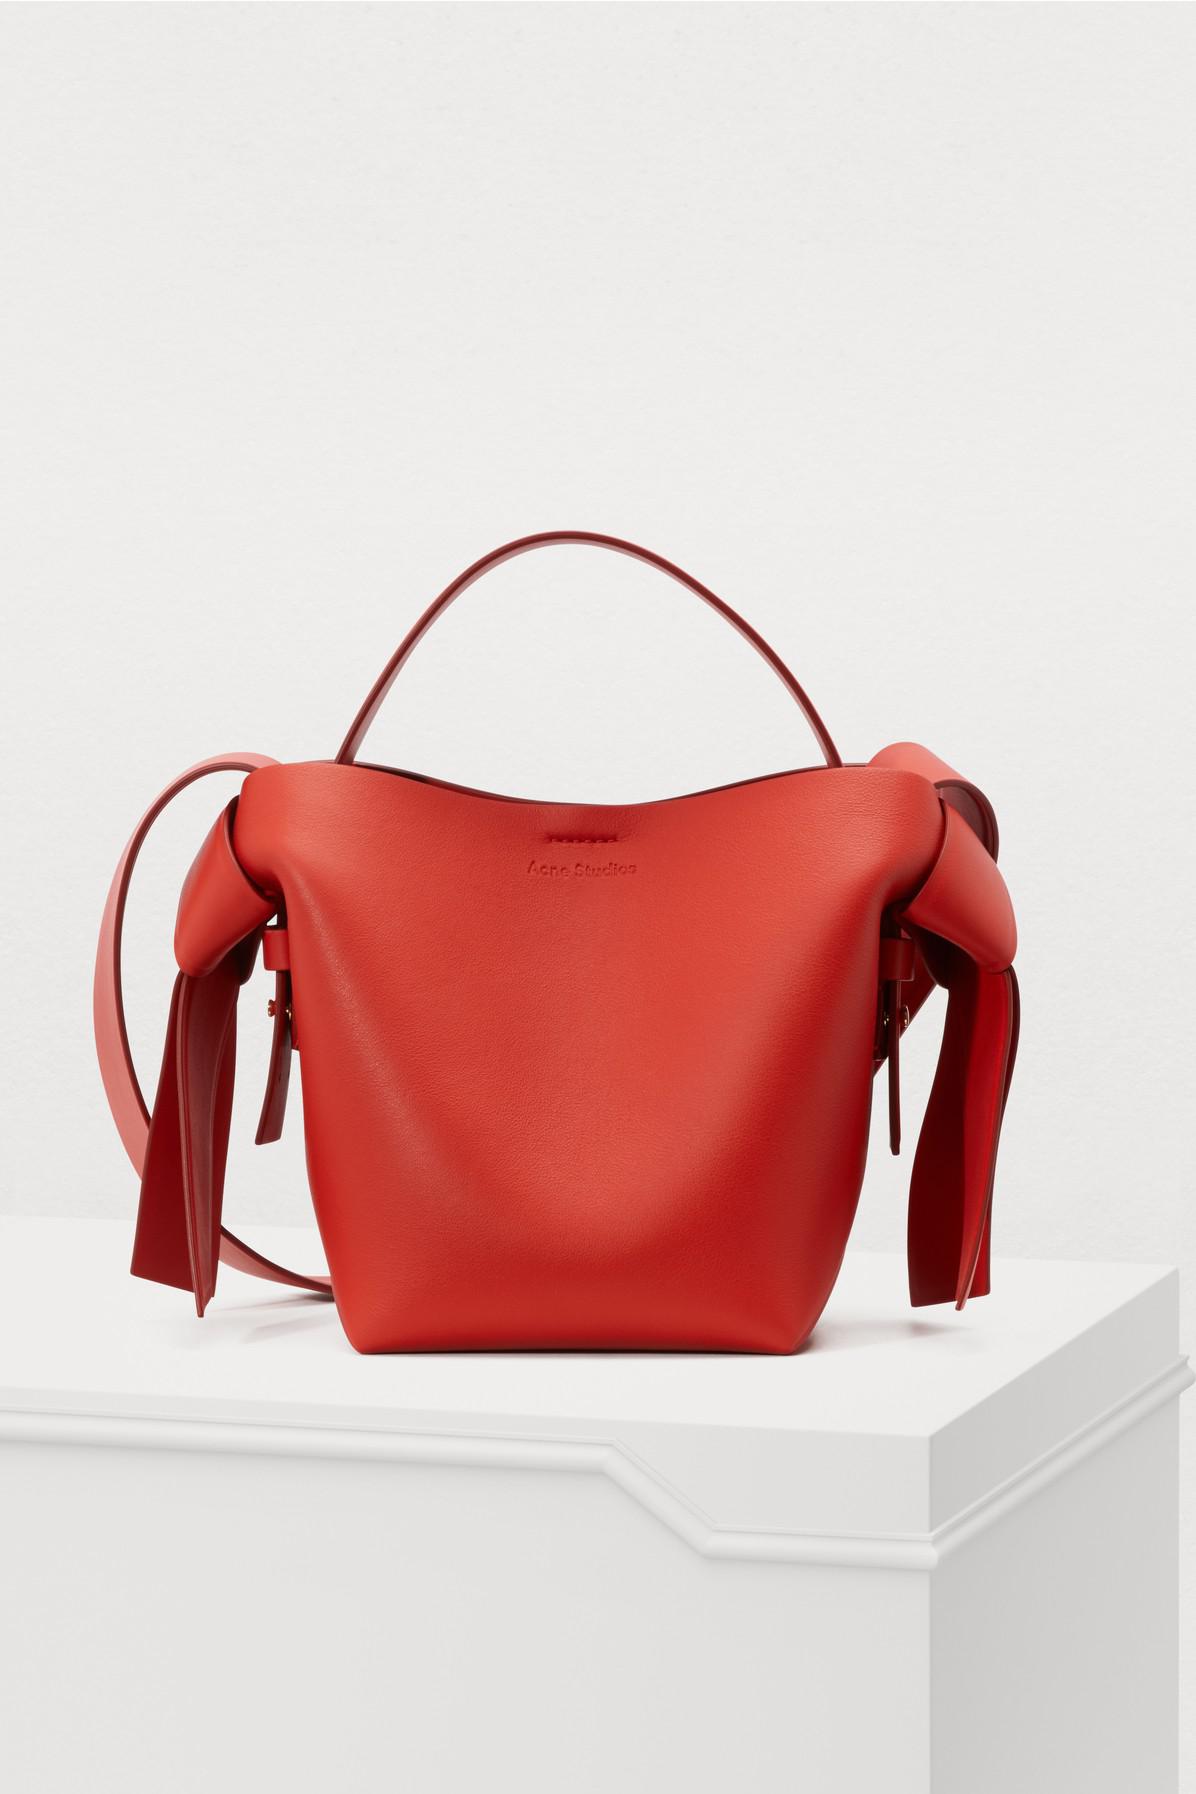 Acne Studios Leather Musubi Mini Bag in Red - Lyst